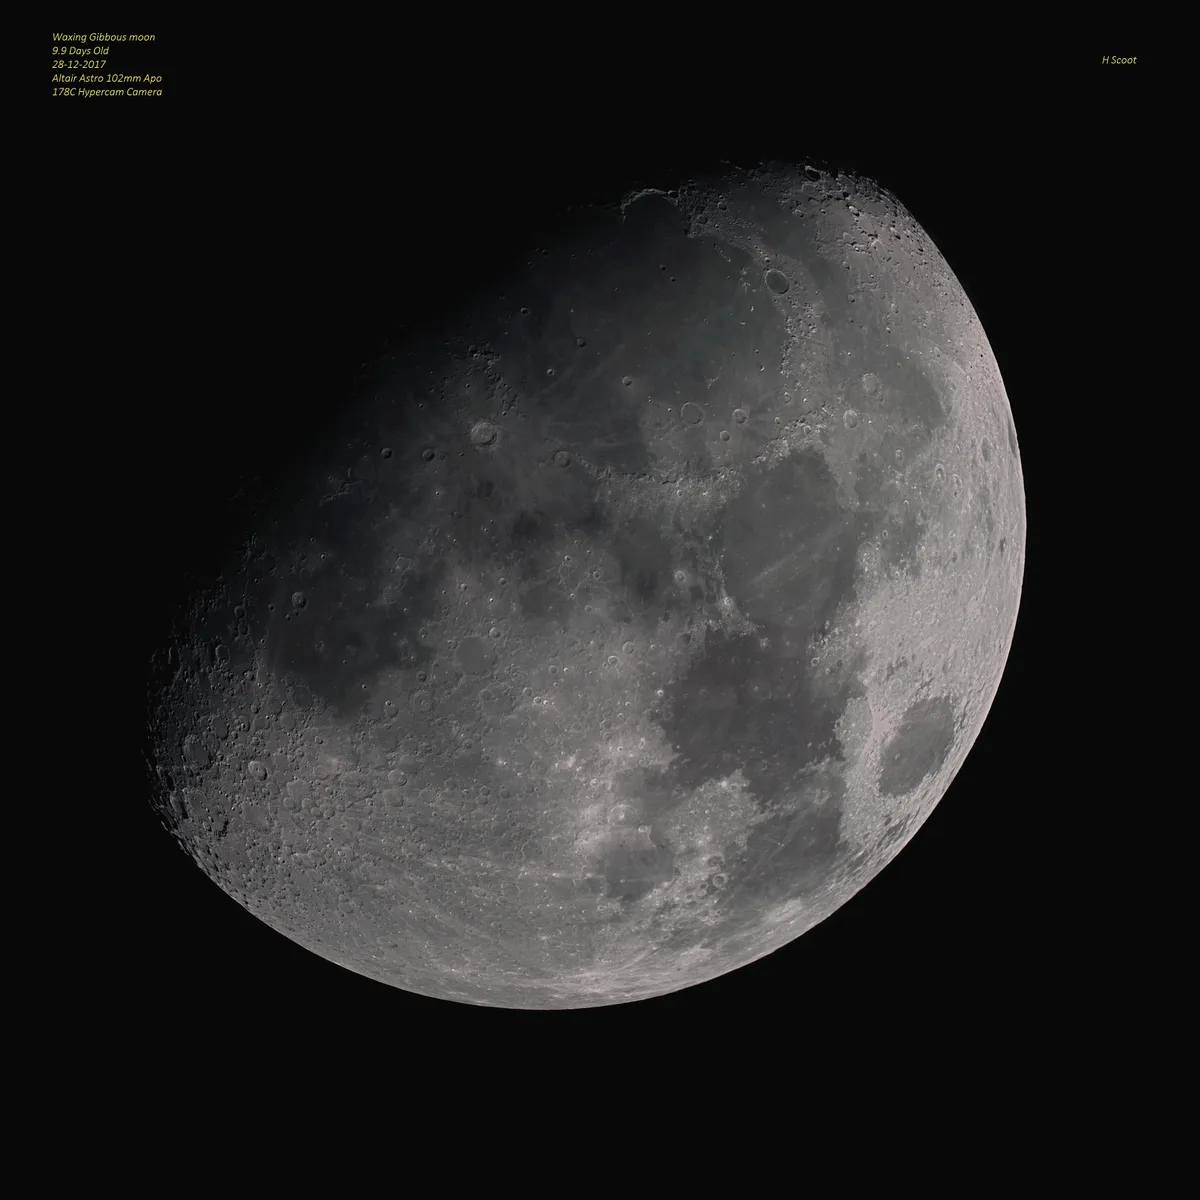 Waxing Gibbous Moon 28-12-2017 by Harvey Scoot, Essex, UK. Equipment: Altair Astro 102mm Apo refractor, Mesu Mount, Altair Astro IMX178C Hypercam.